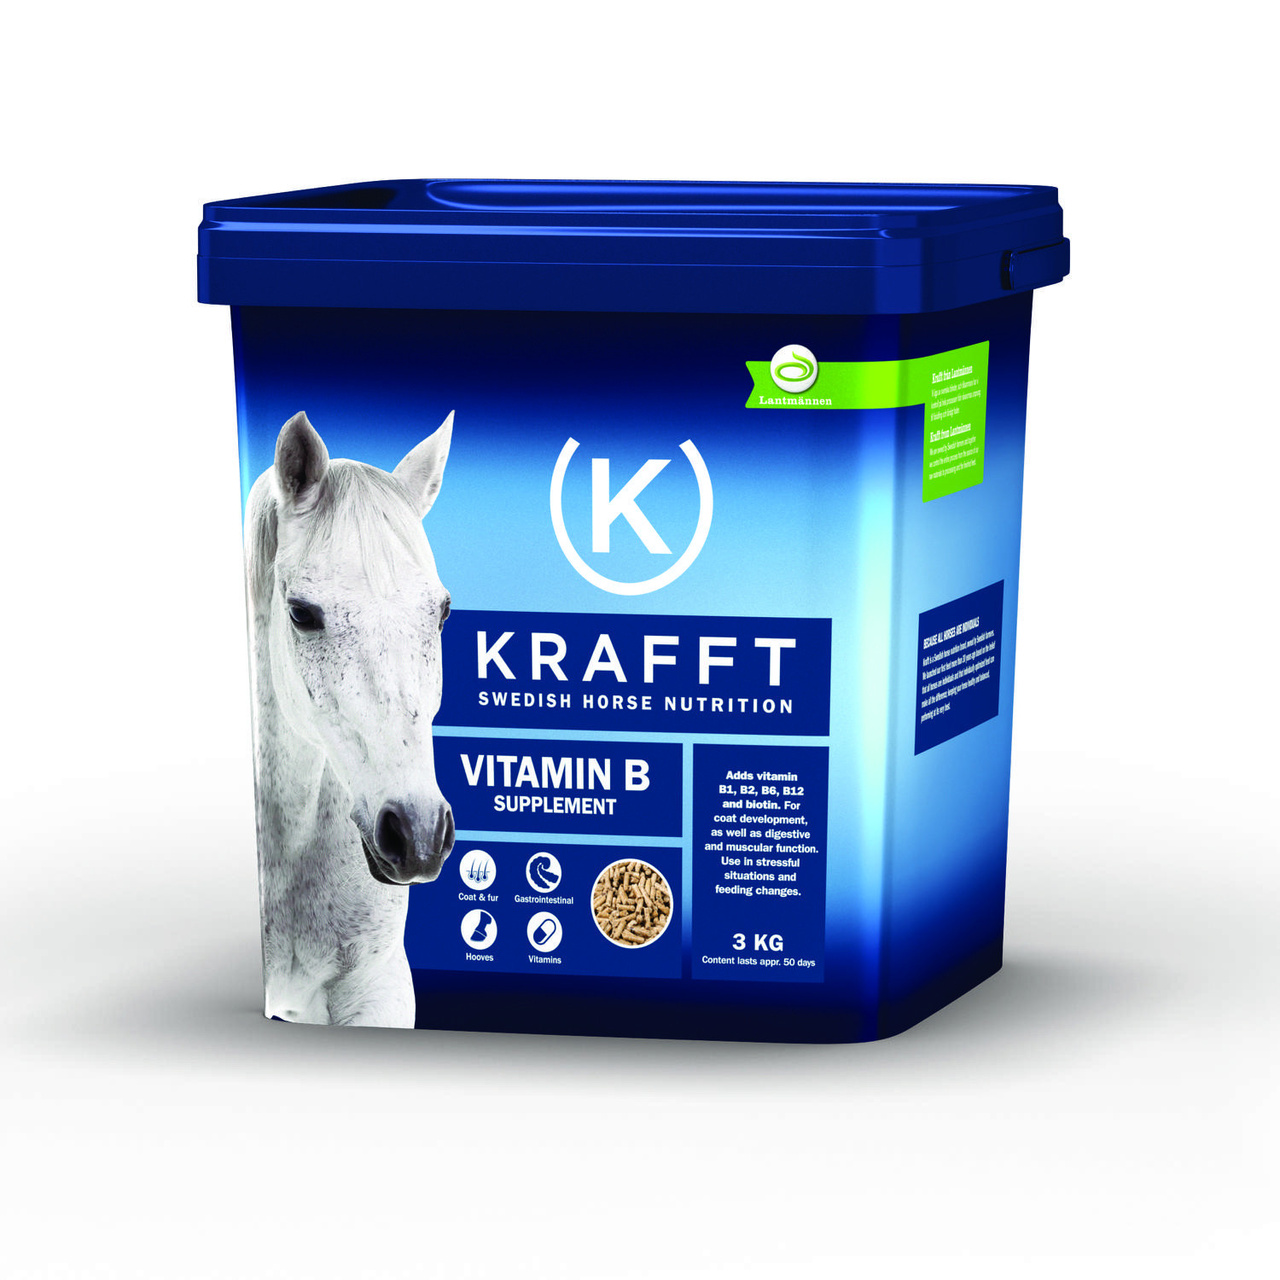 Krafft vitamin B 3 kg